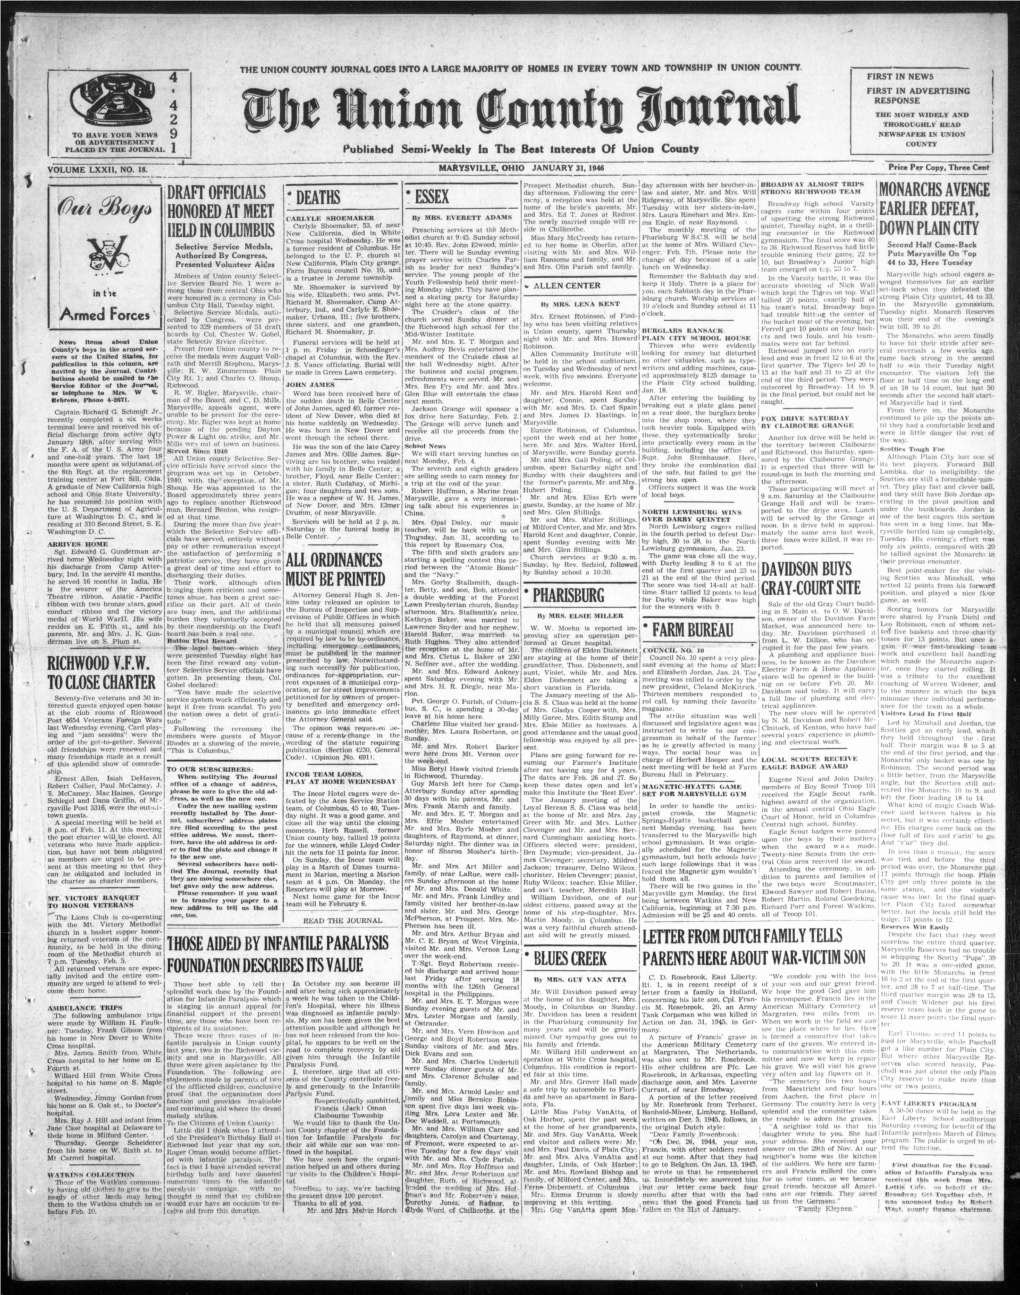 The Union County Journal. (Marysville, Ohio), 1946-01-31, [P ]